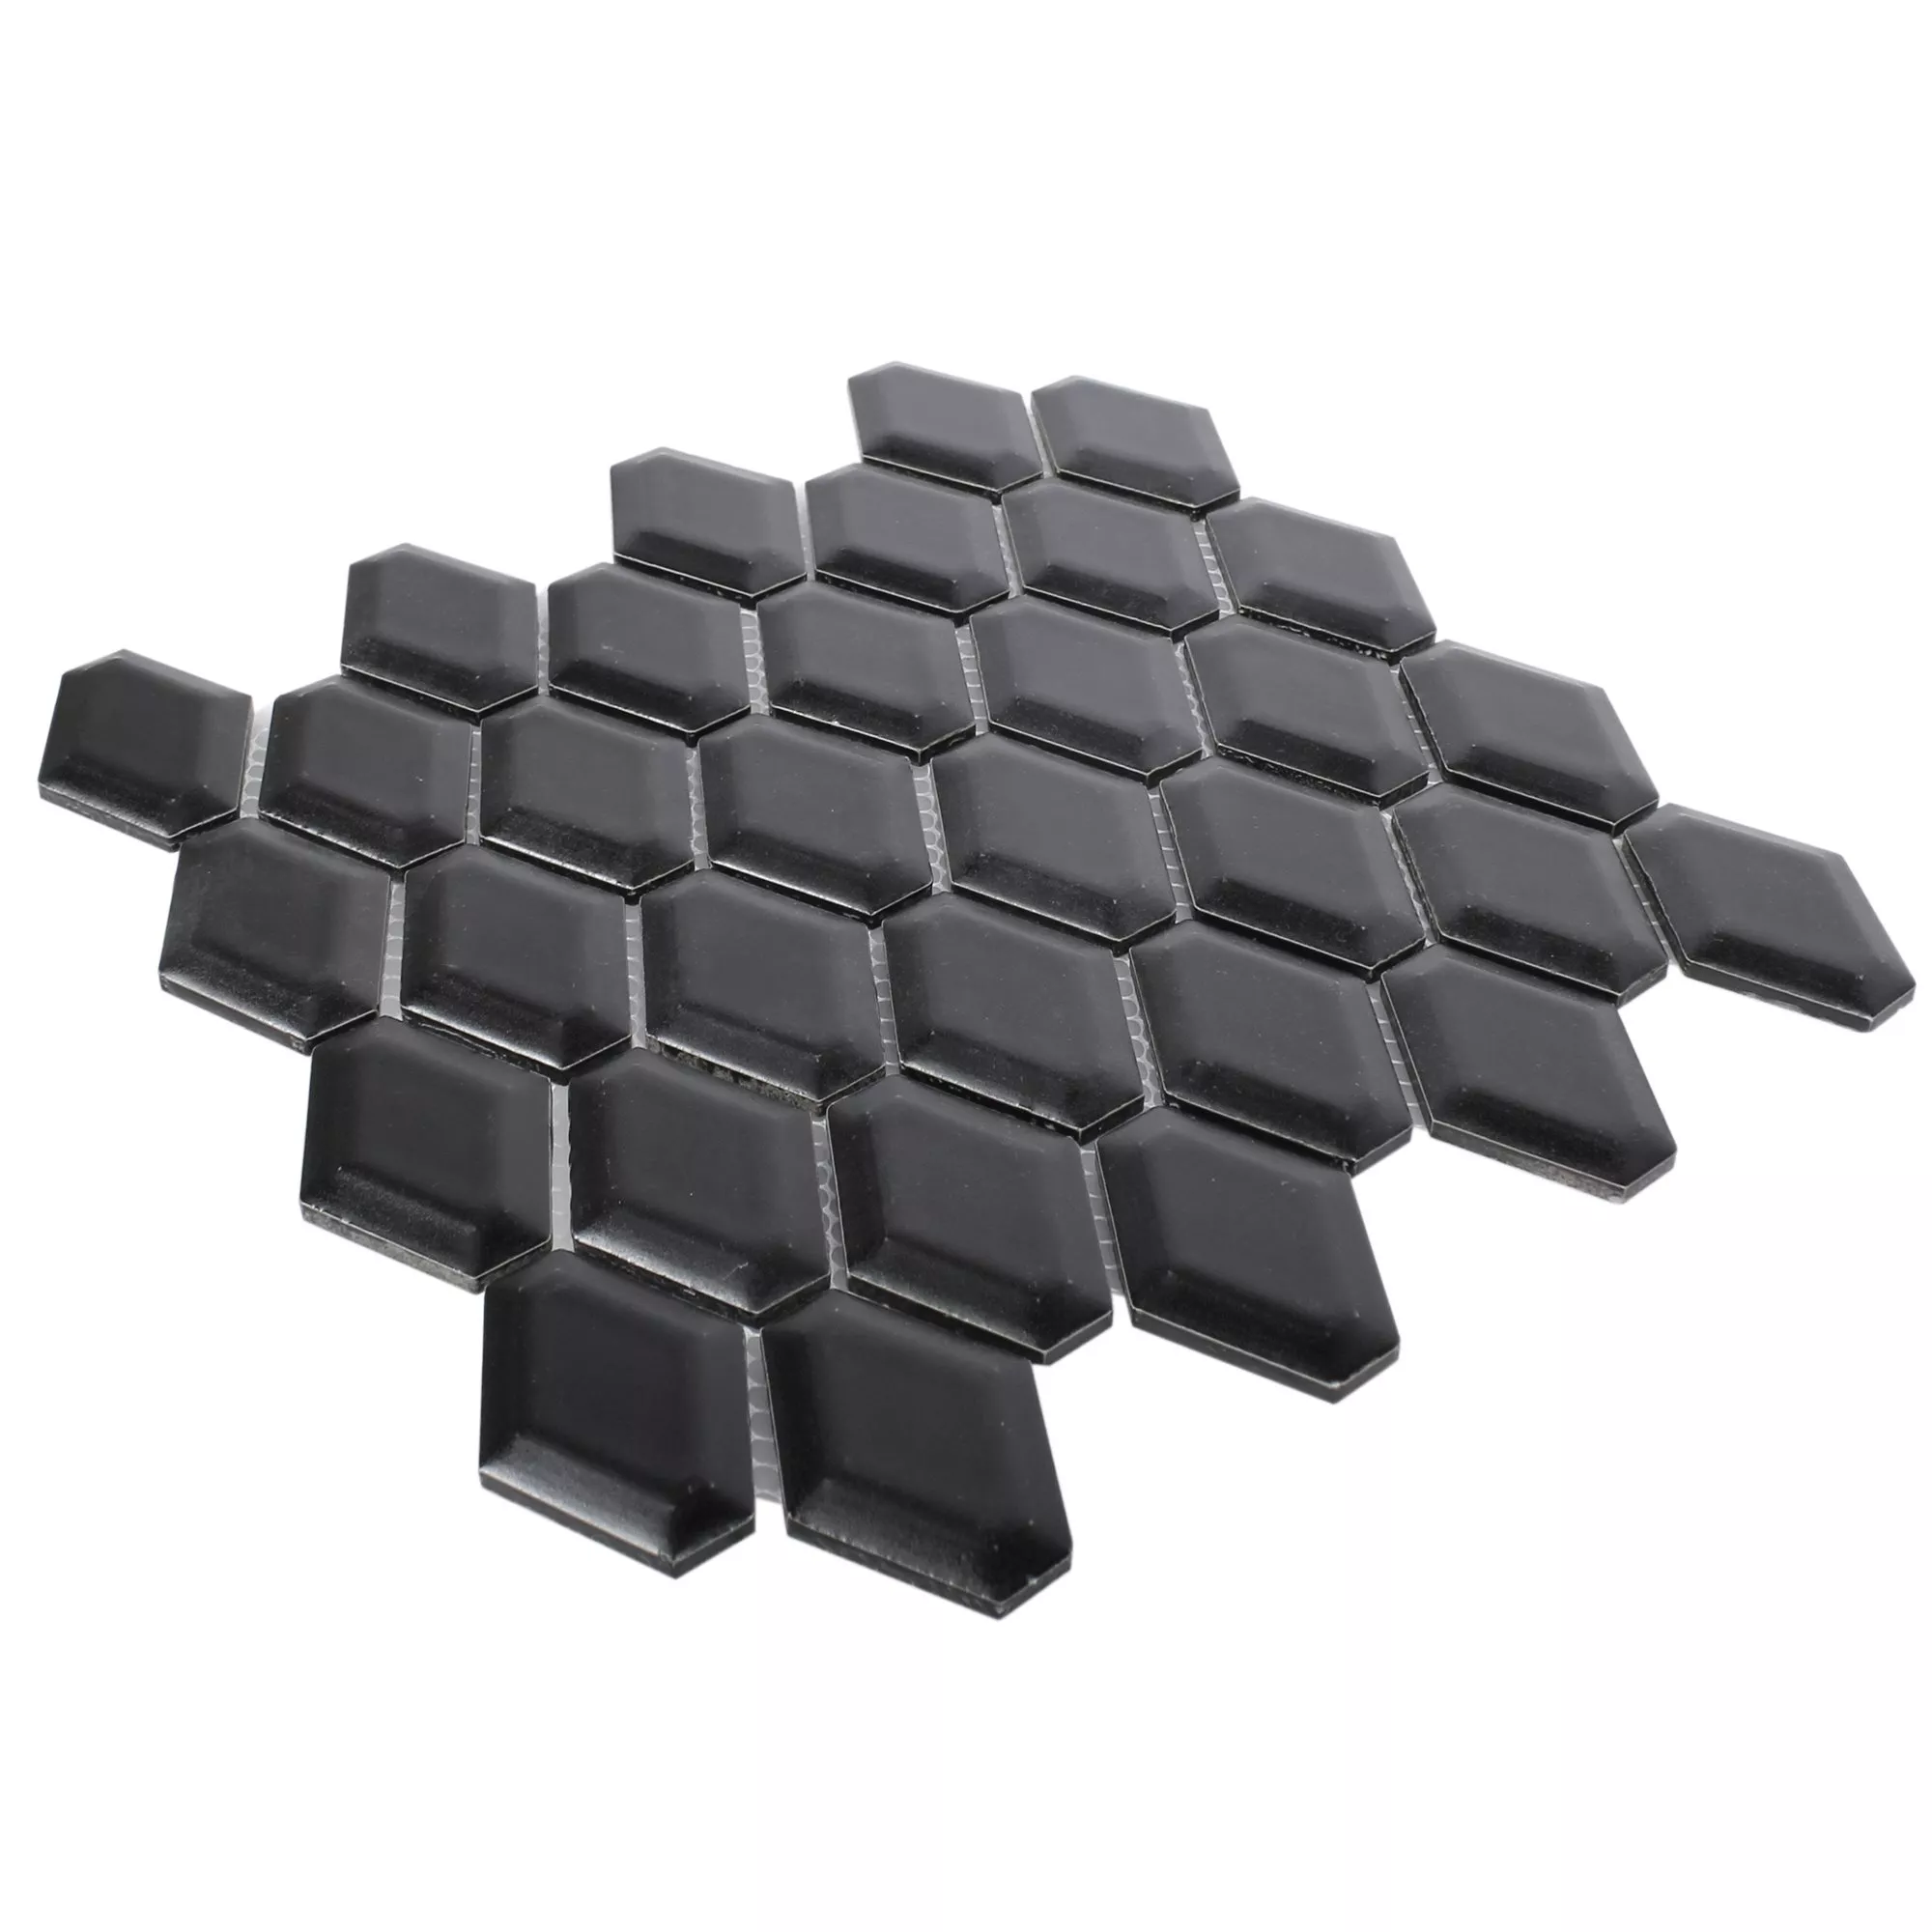 Sample Ceramic Mosaic Tiles Leandro Metro Black Mat